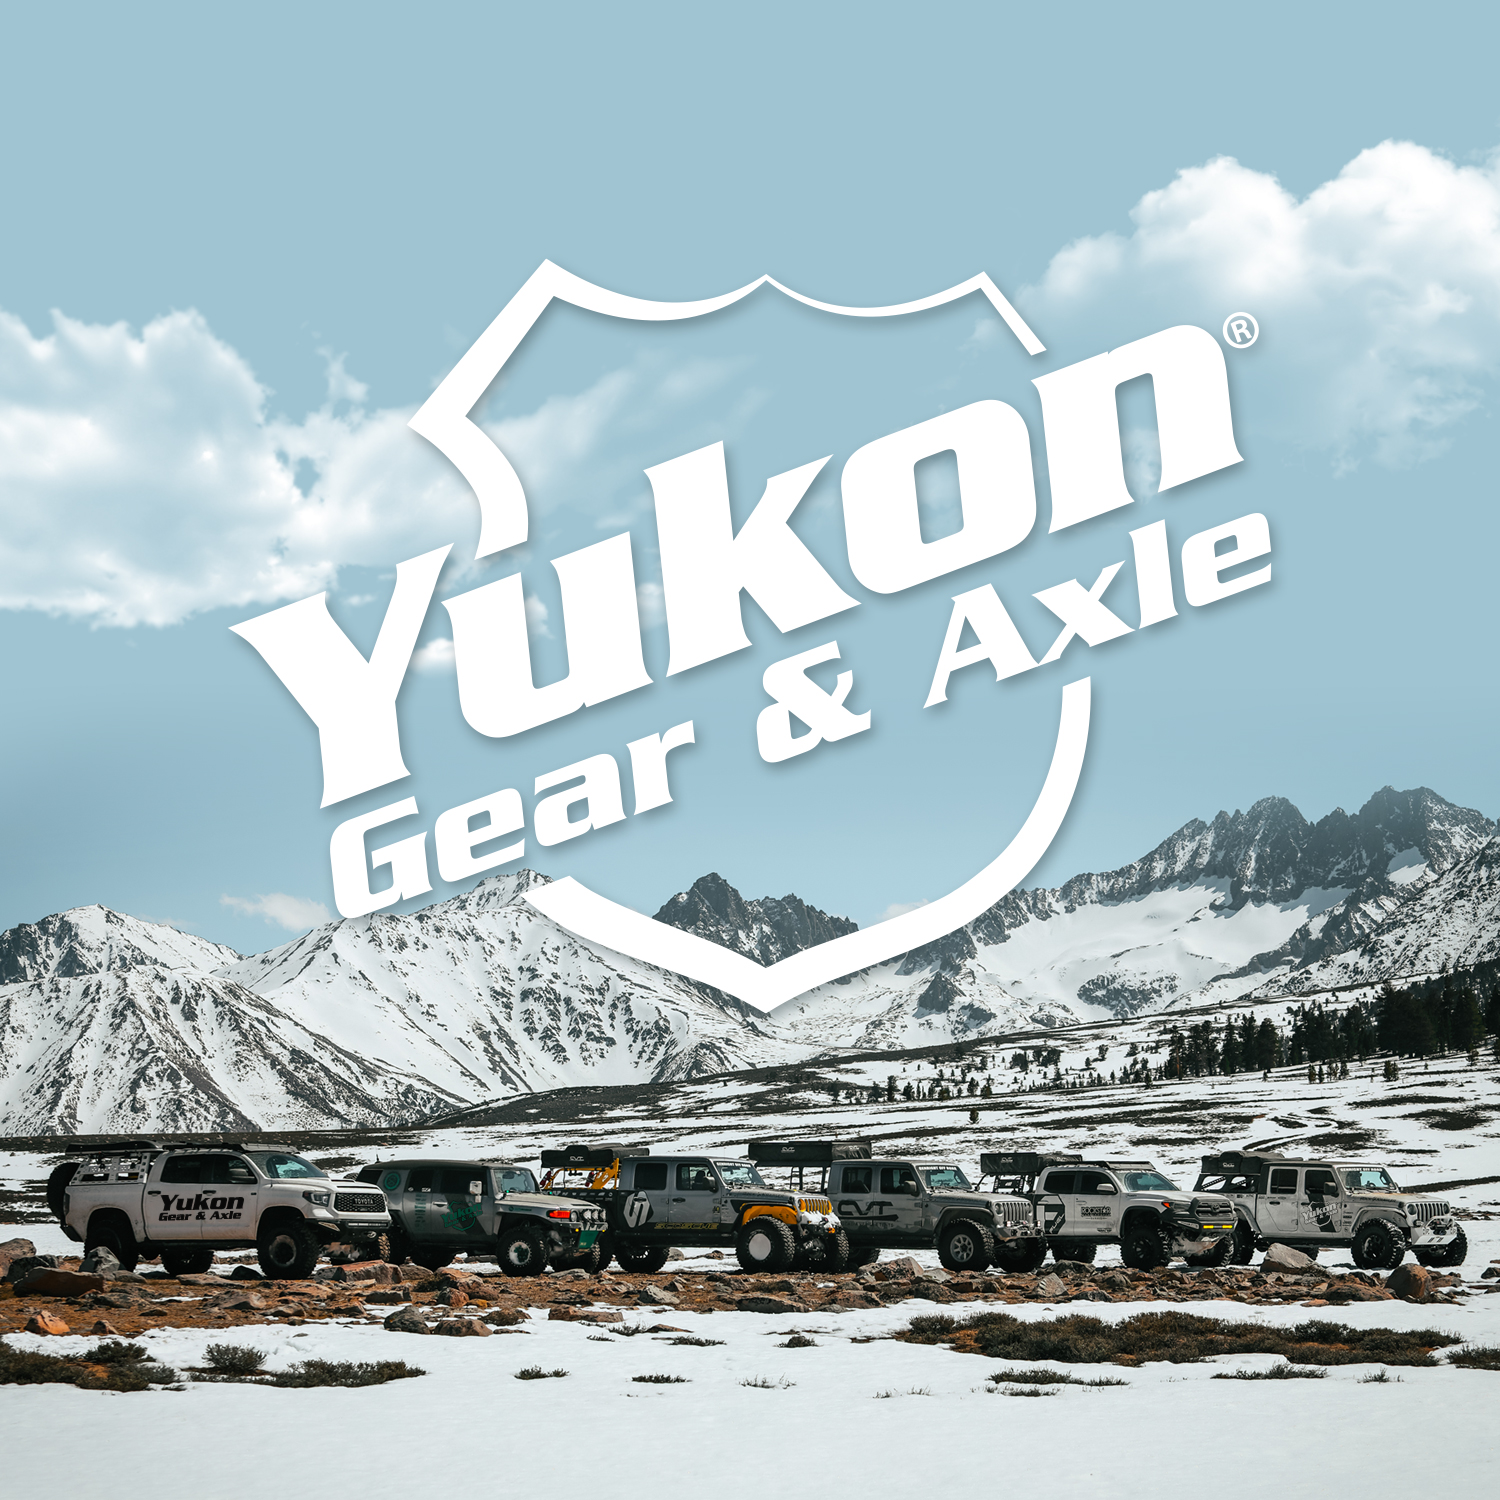 Yukon high performance Ring & Pinion gear set, Chrysler 9.25" front, 3.73 ratio 